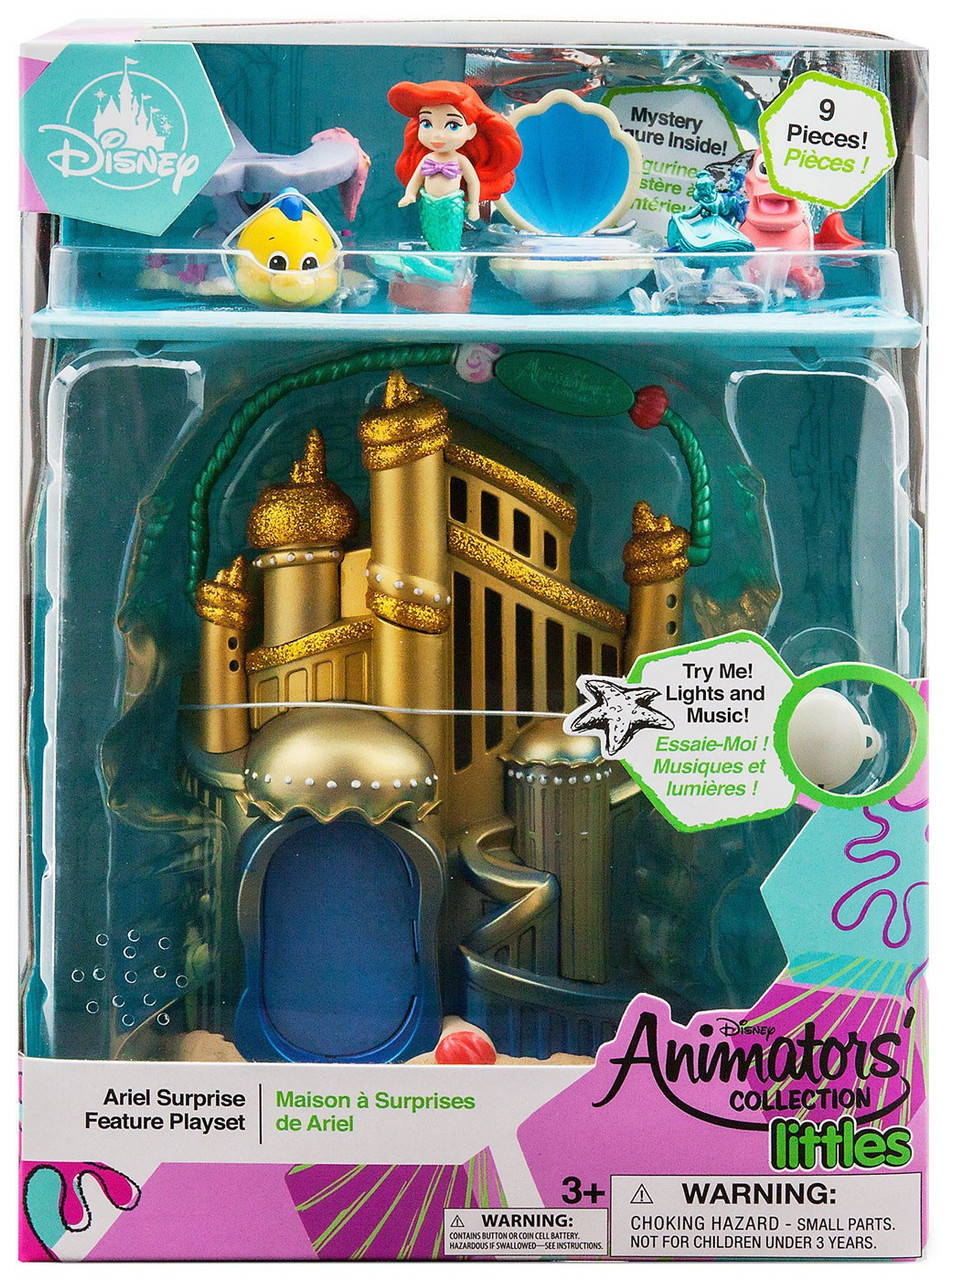 Disney The Little Mermaid Littles Animators Collection Ariel Surprise Feature Exclusive Micro